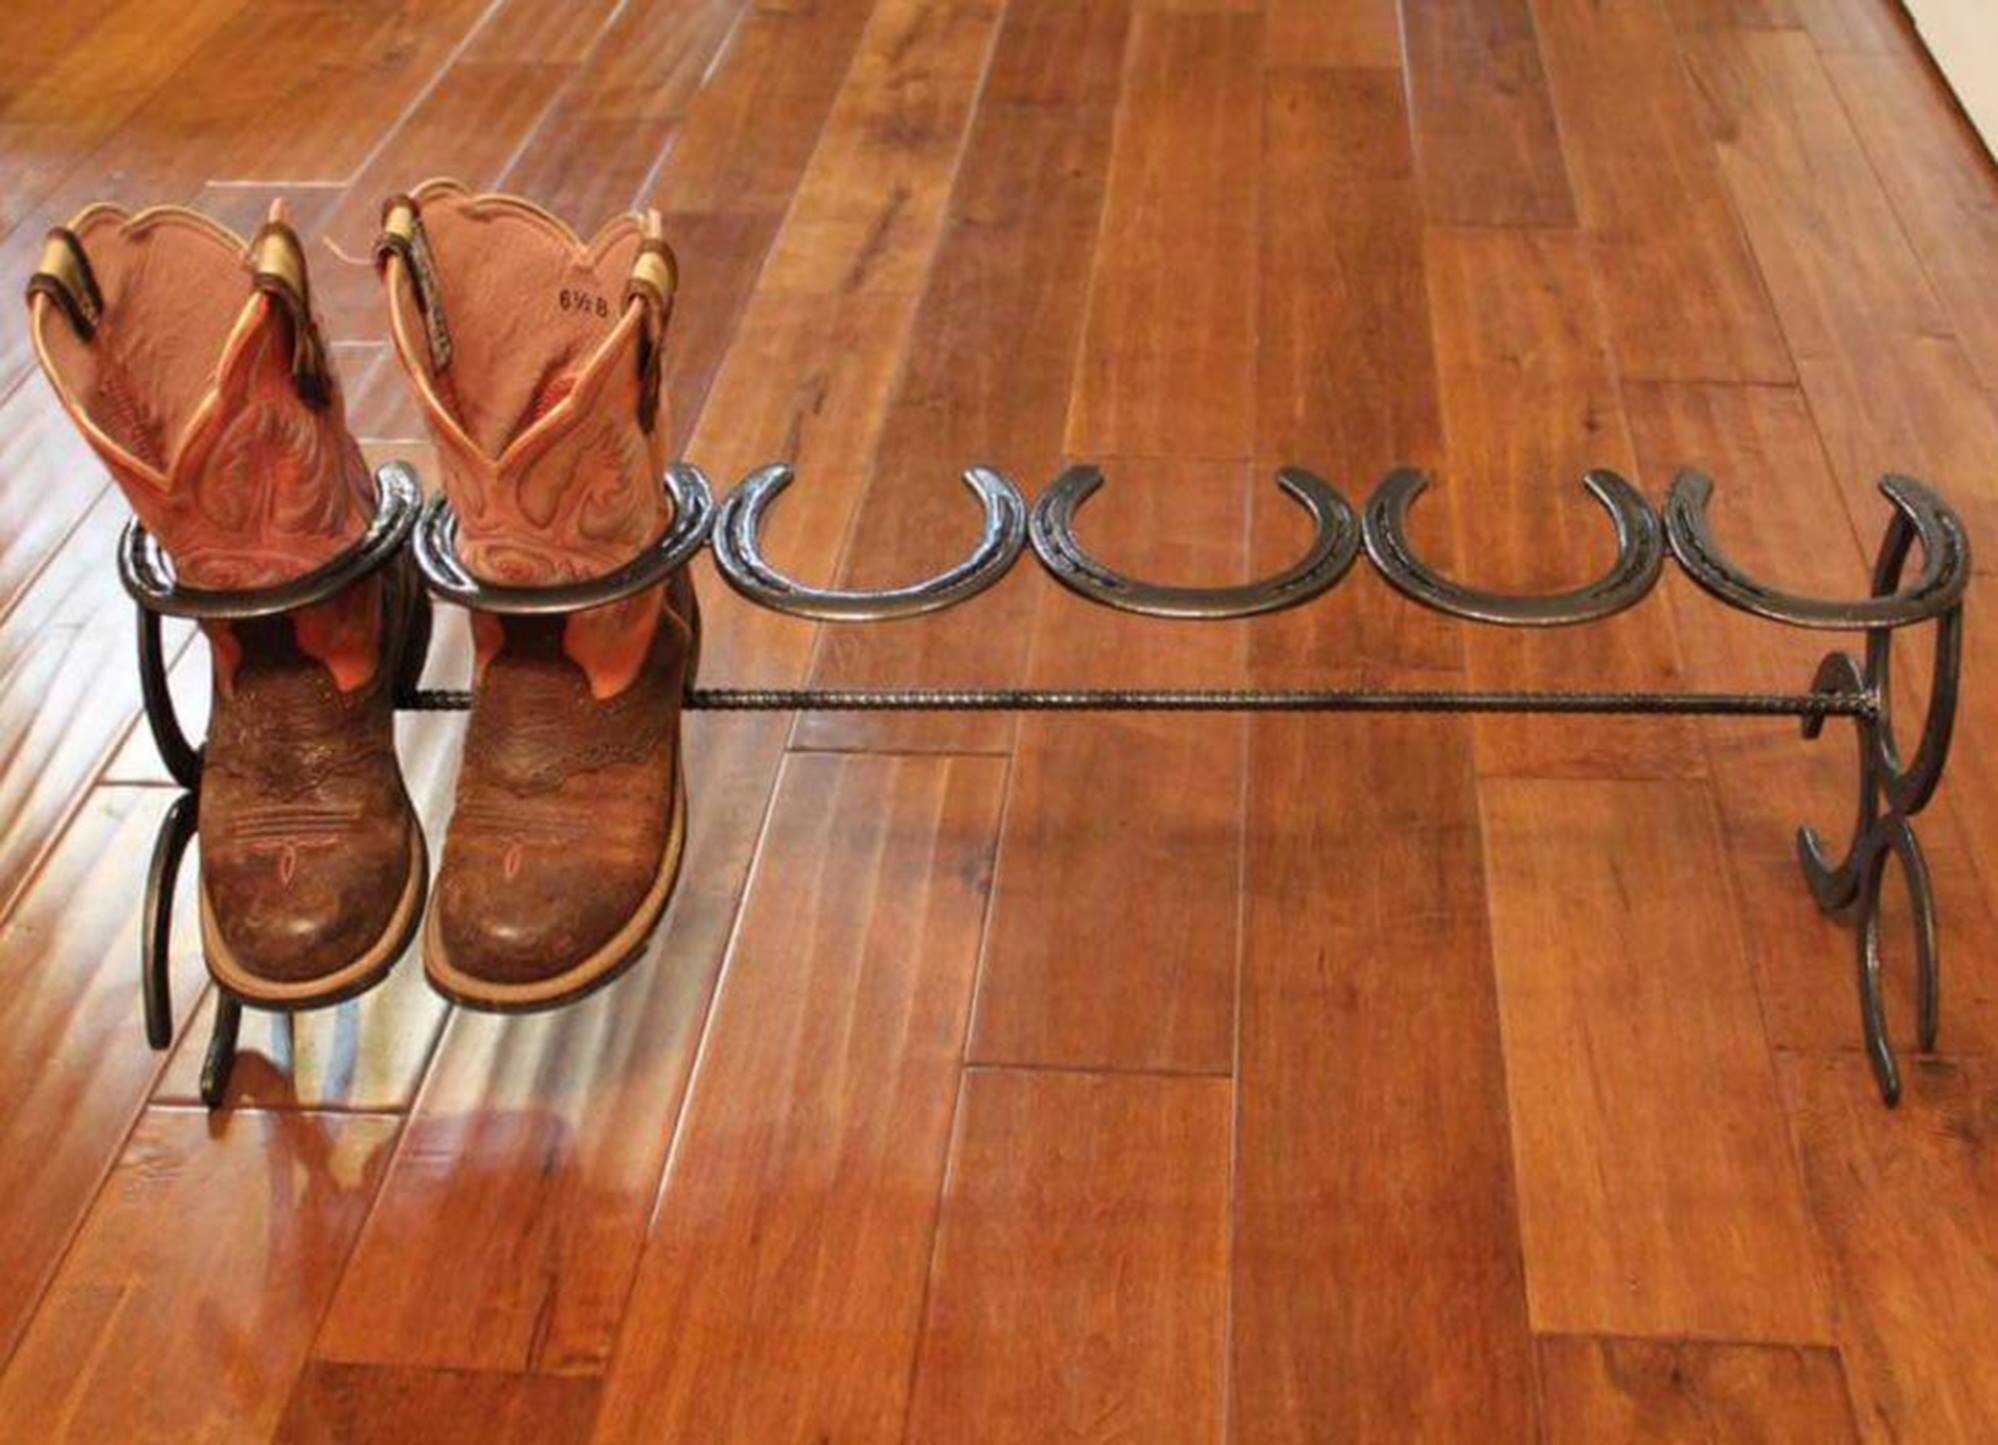 5+ horseshoe boot rack ideas guide patterns